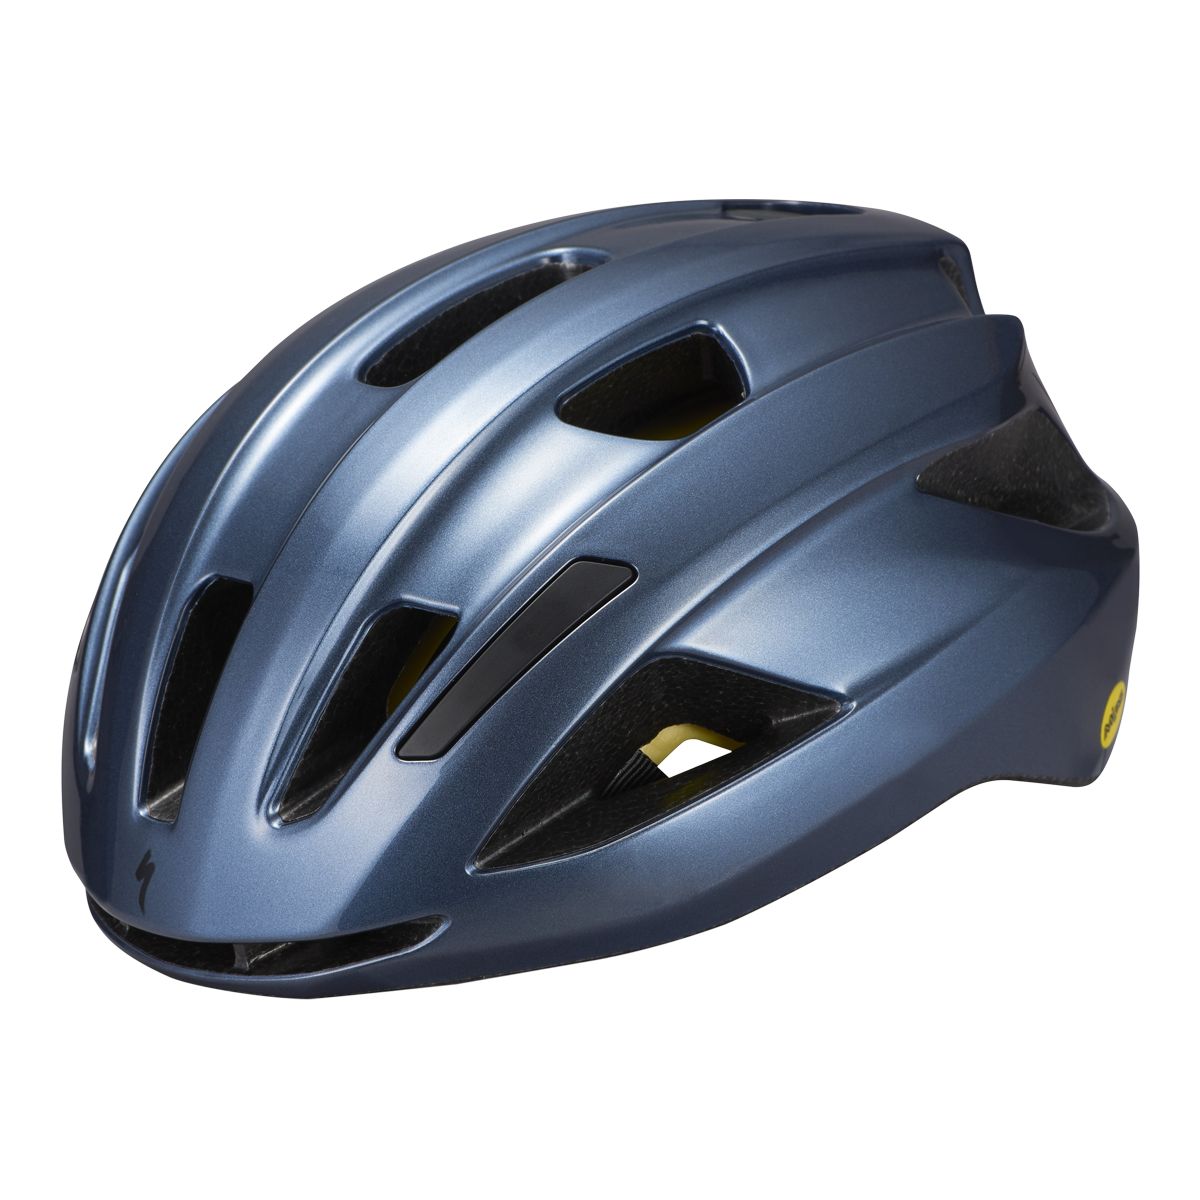 Specialized Align II Mips Bike Helmet